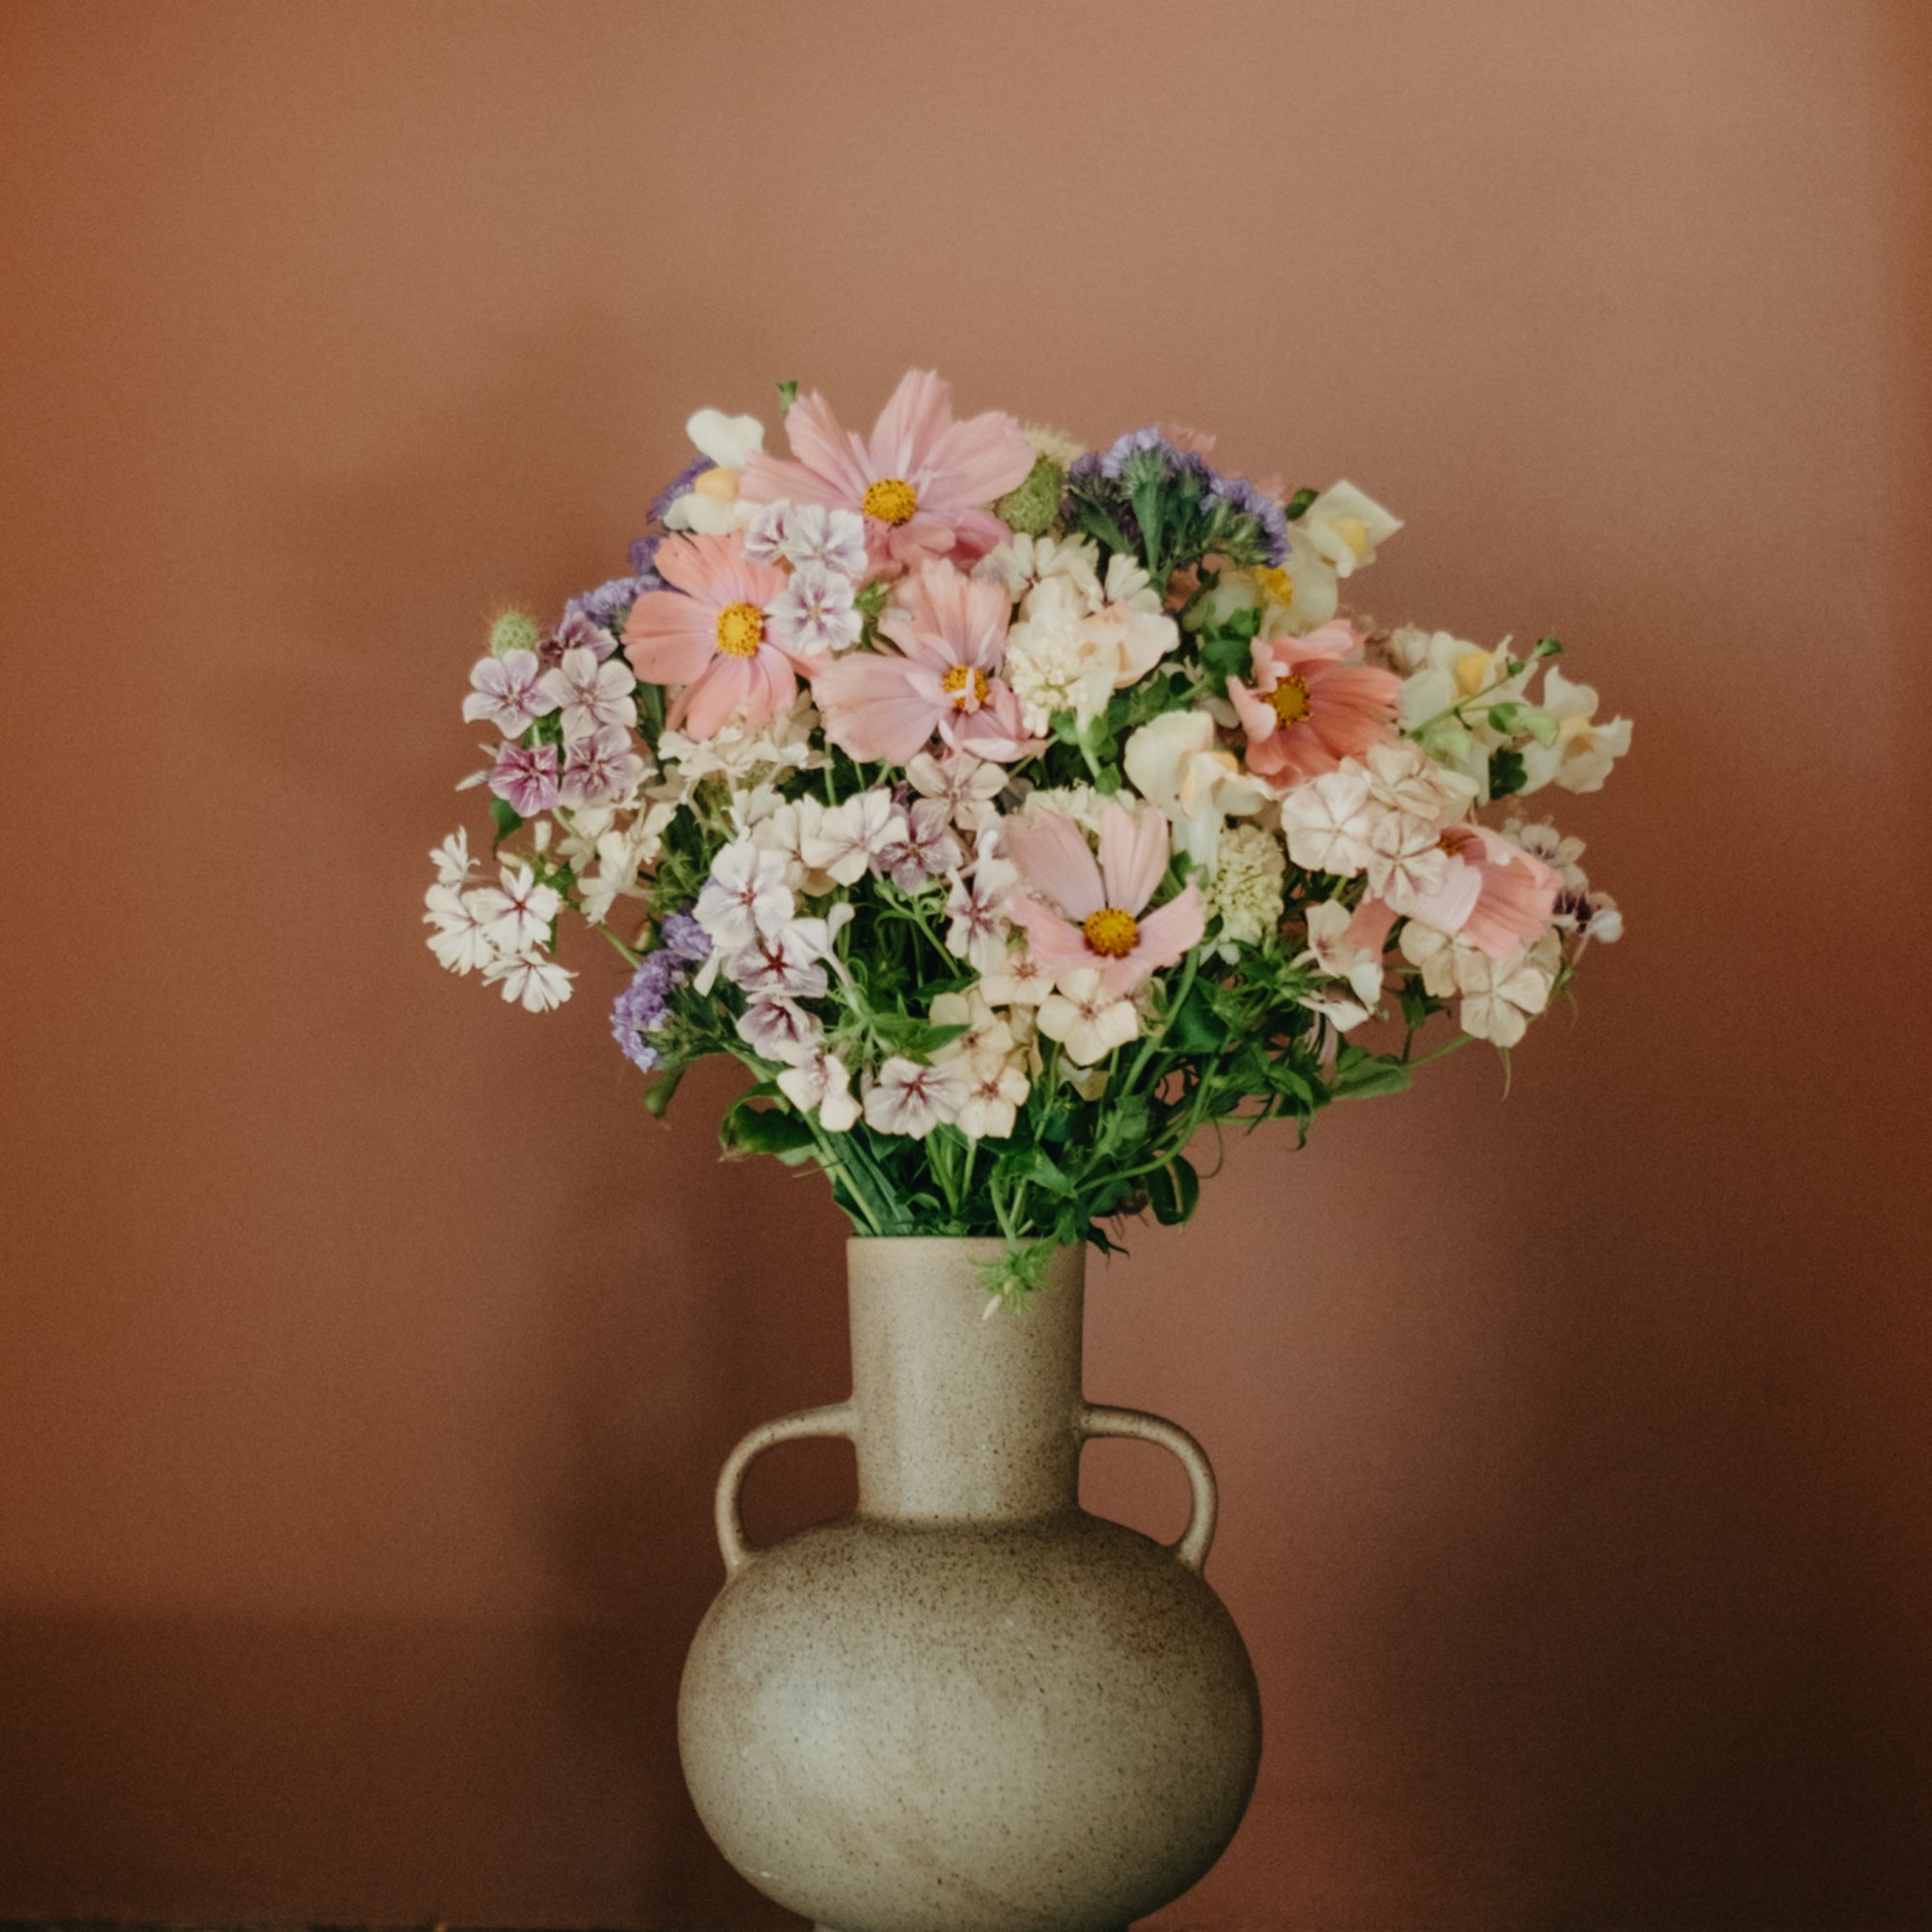 Bon Bon Bouquet Collection, fröer till en bukett i pastellfärger